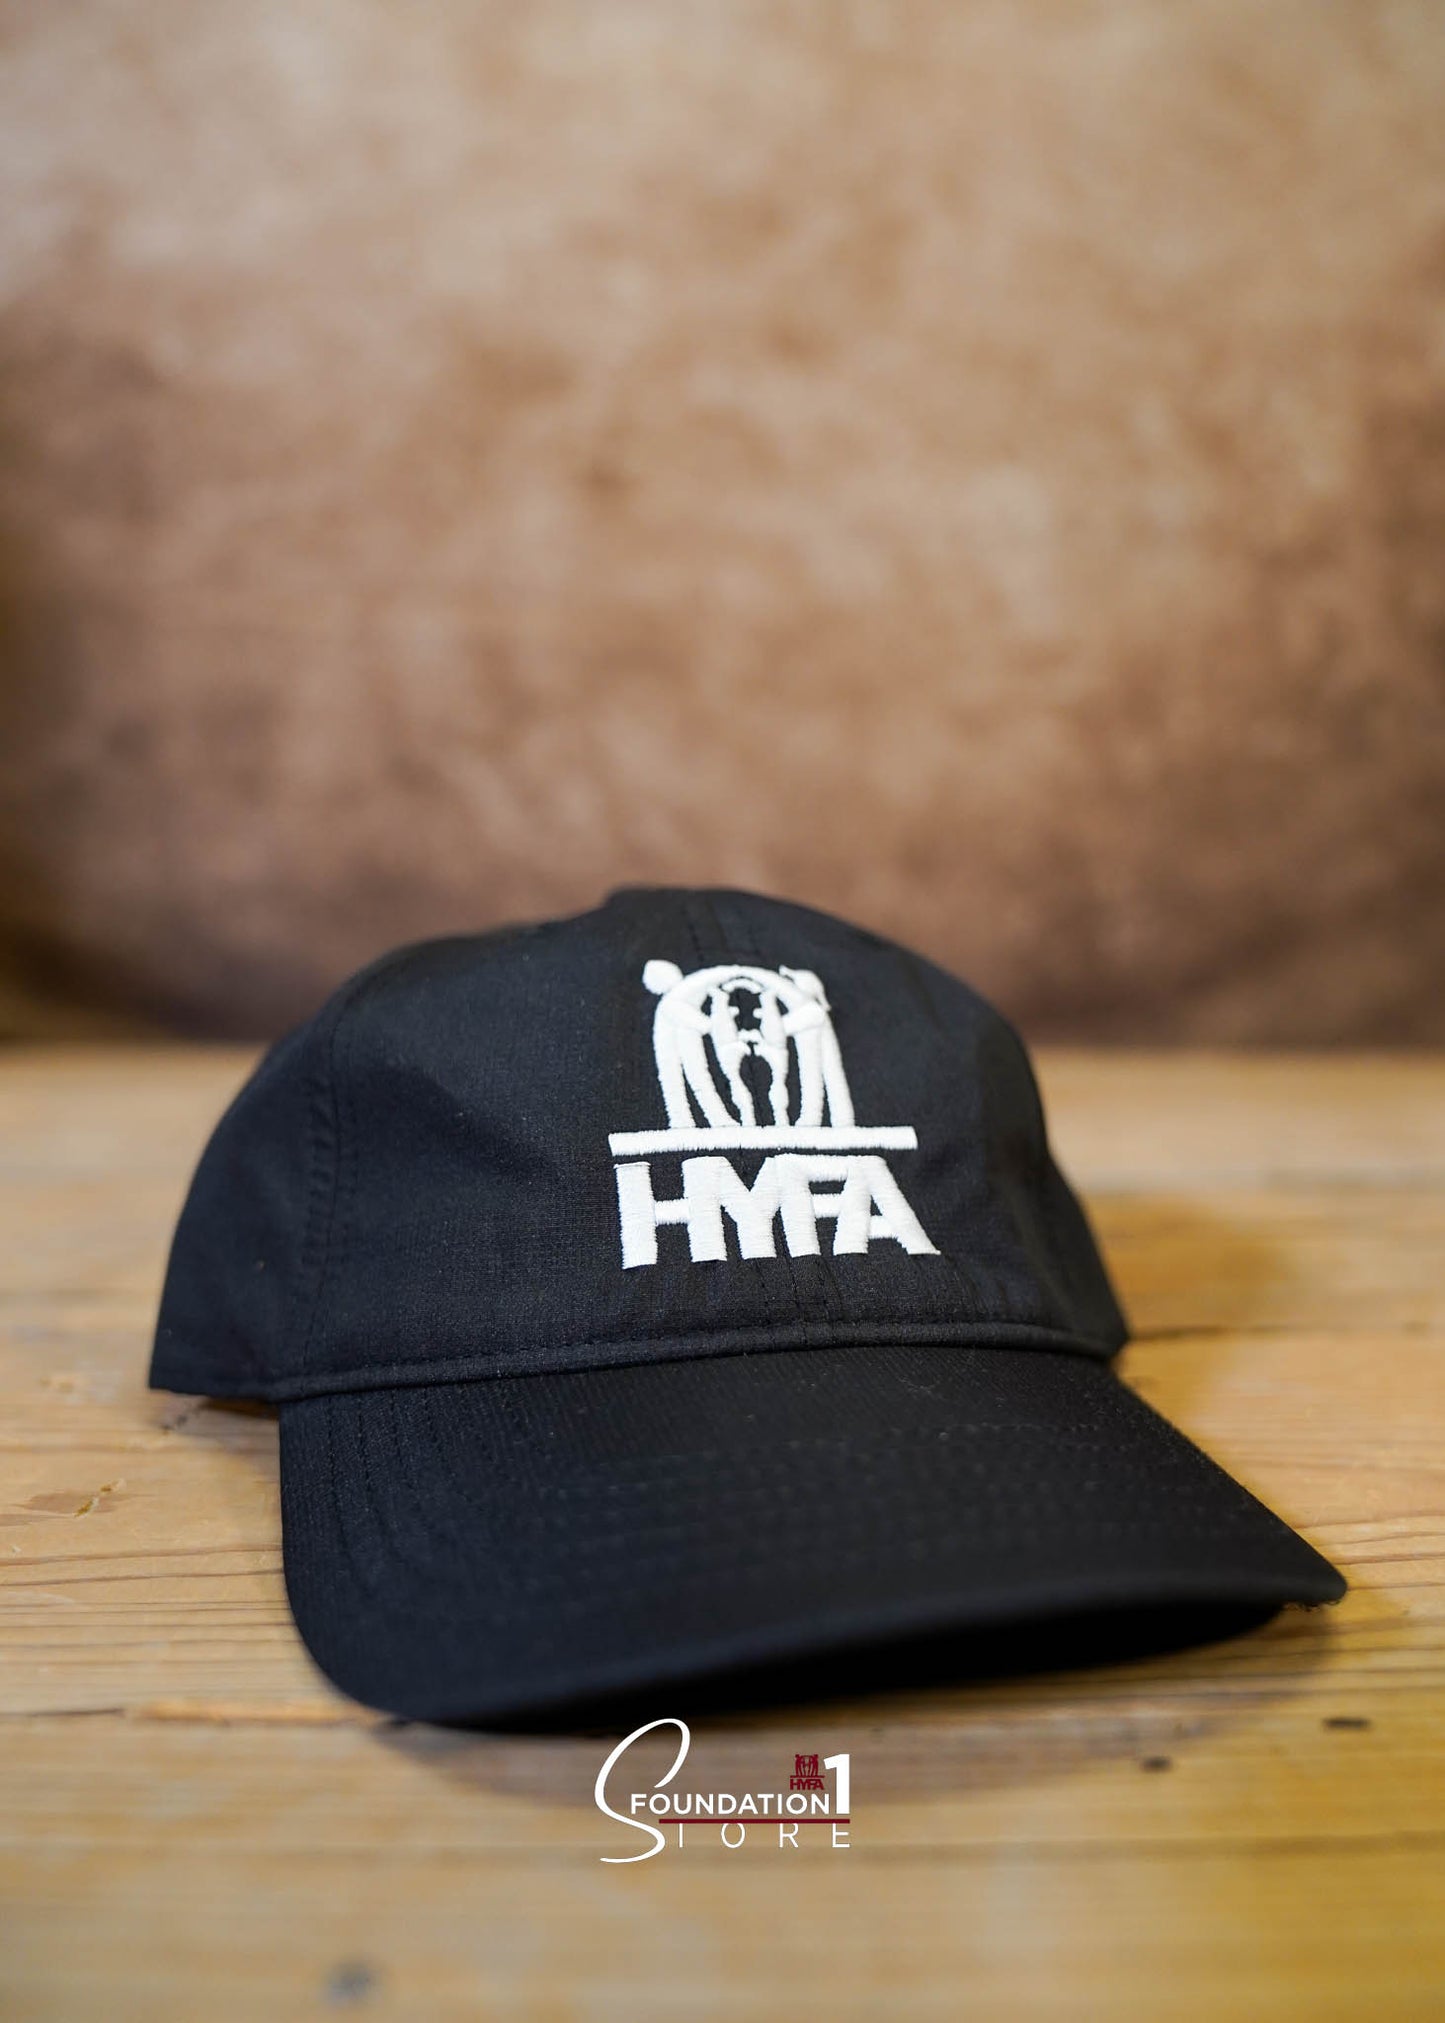 HYFA Black Ball Cap